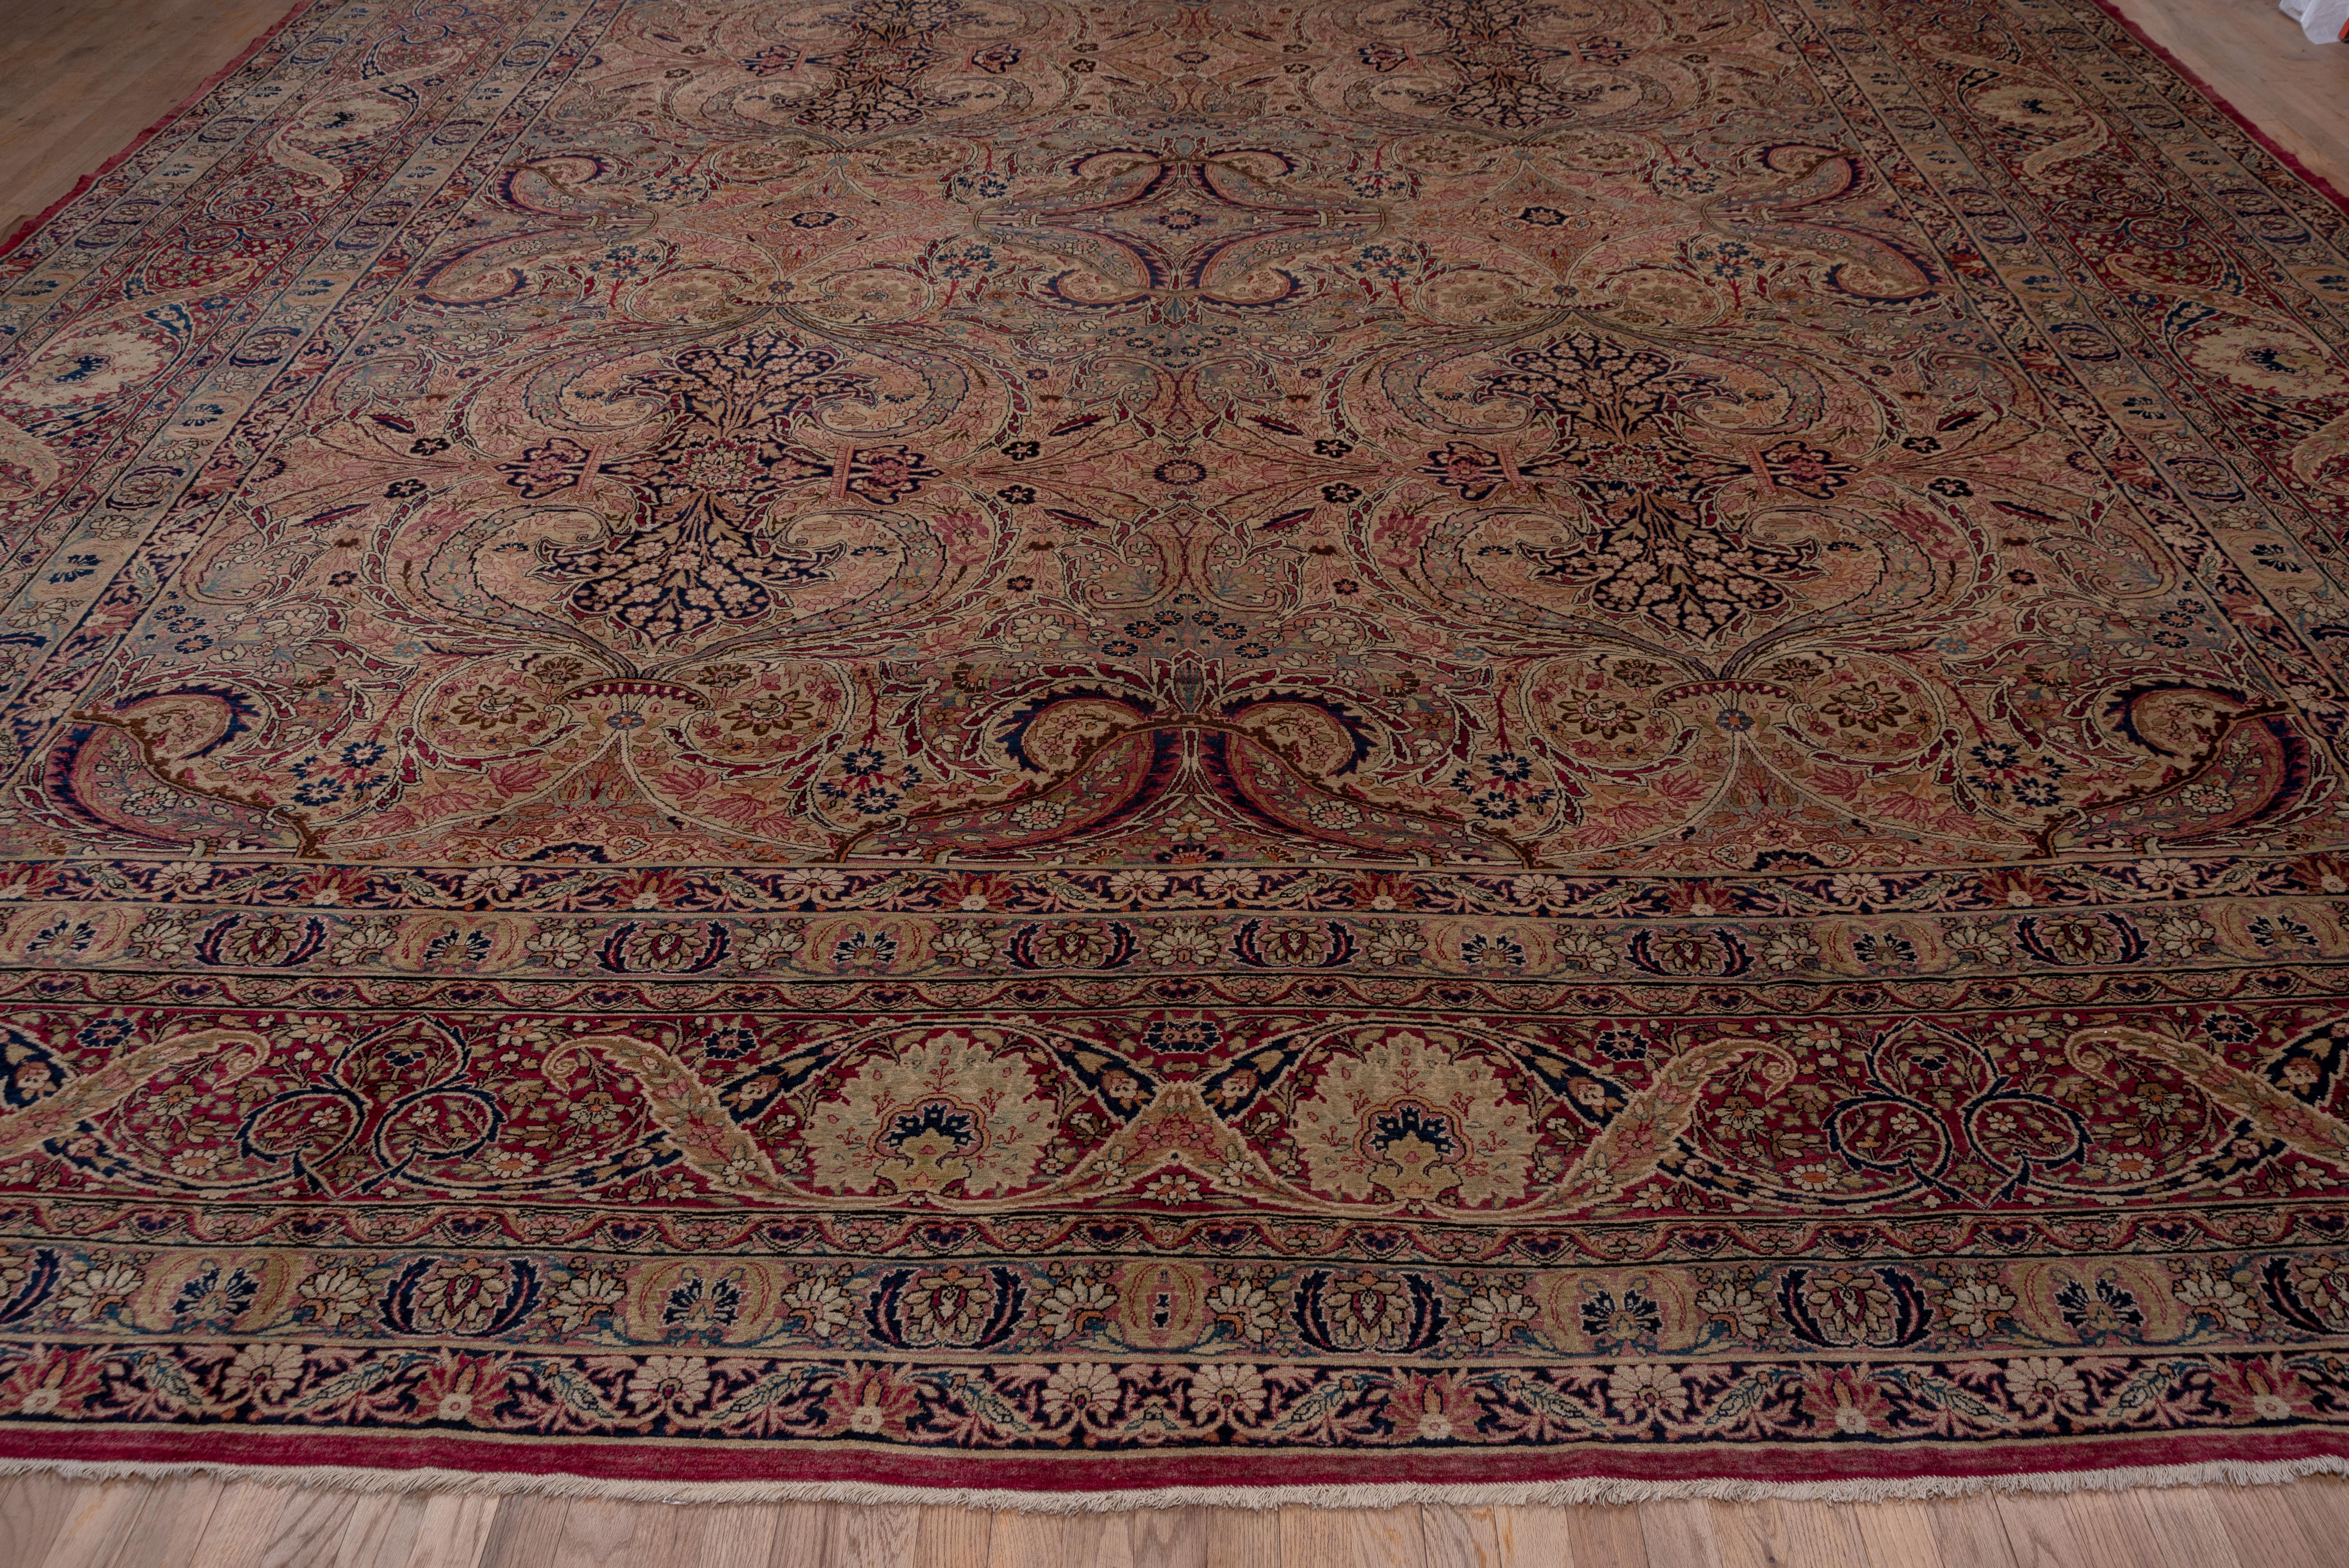 Hand-Knotted Rare Antique Persian Lavar Kerman Workshop Carpet, Allover Field, Colorful